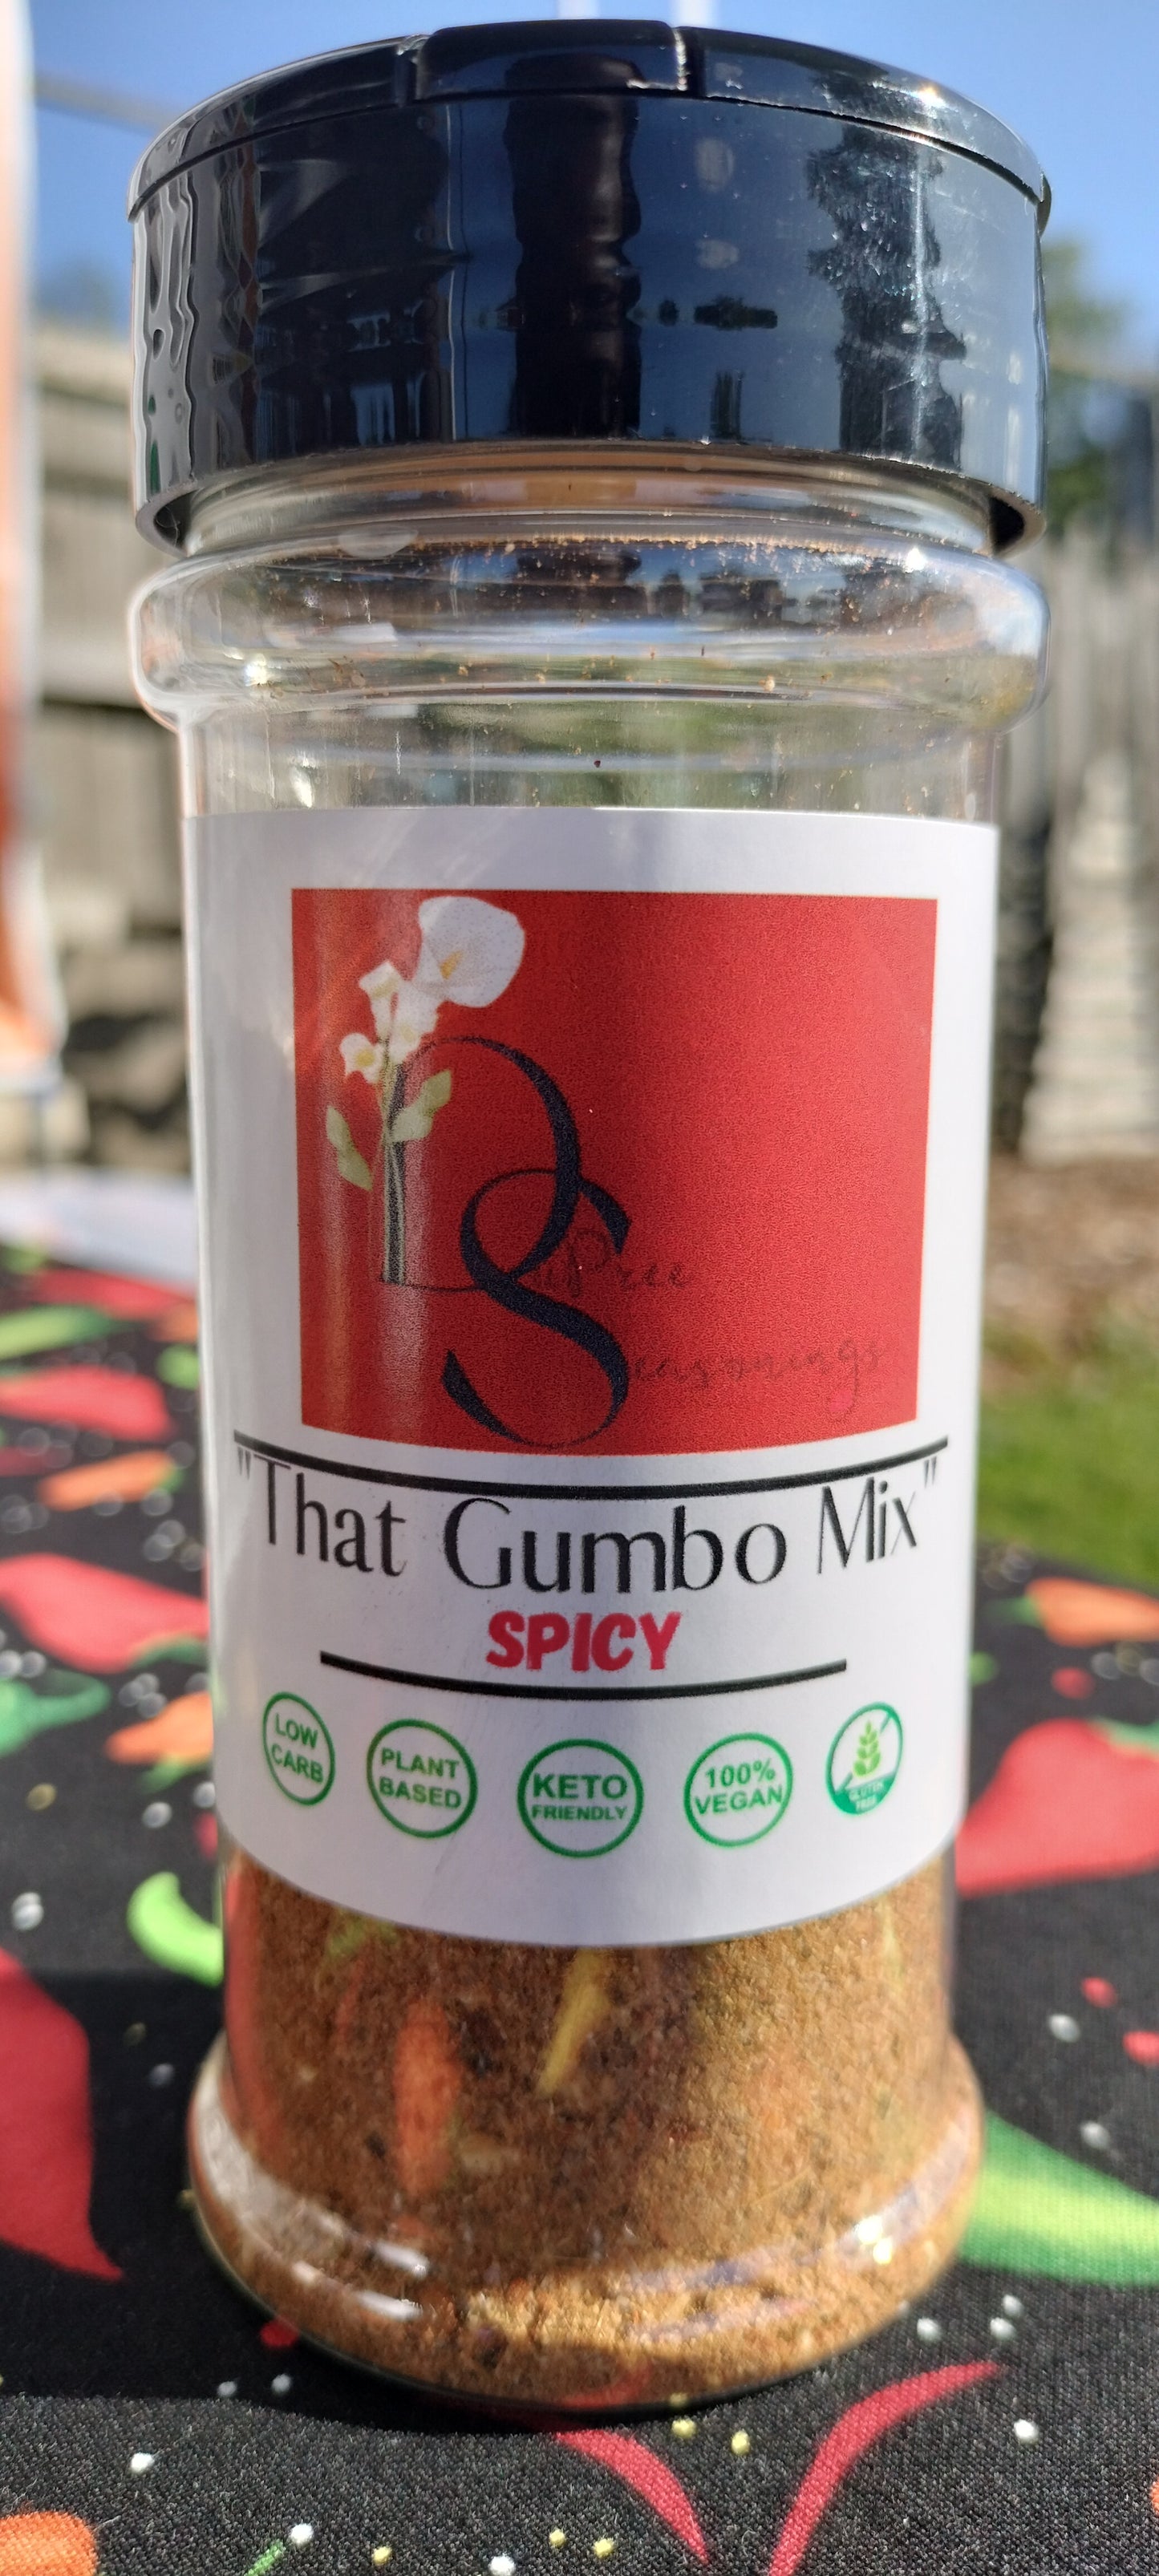 That Gumbo Mix Spicy